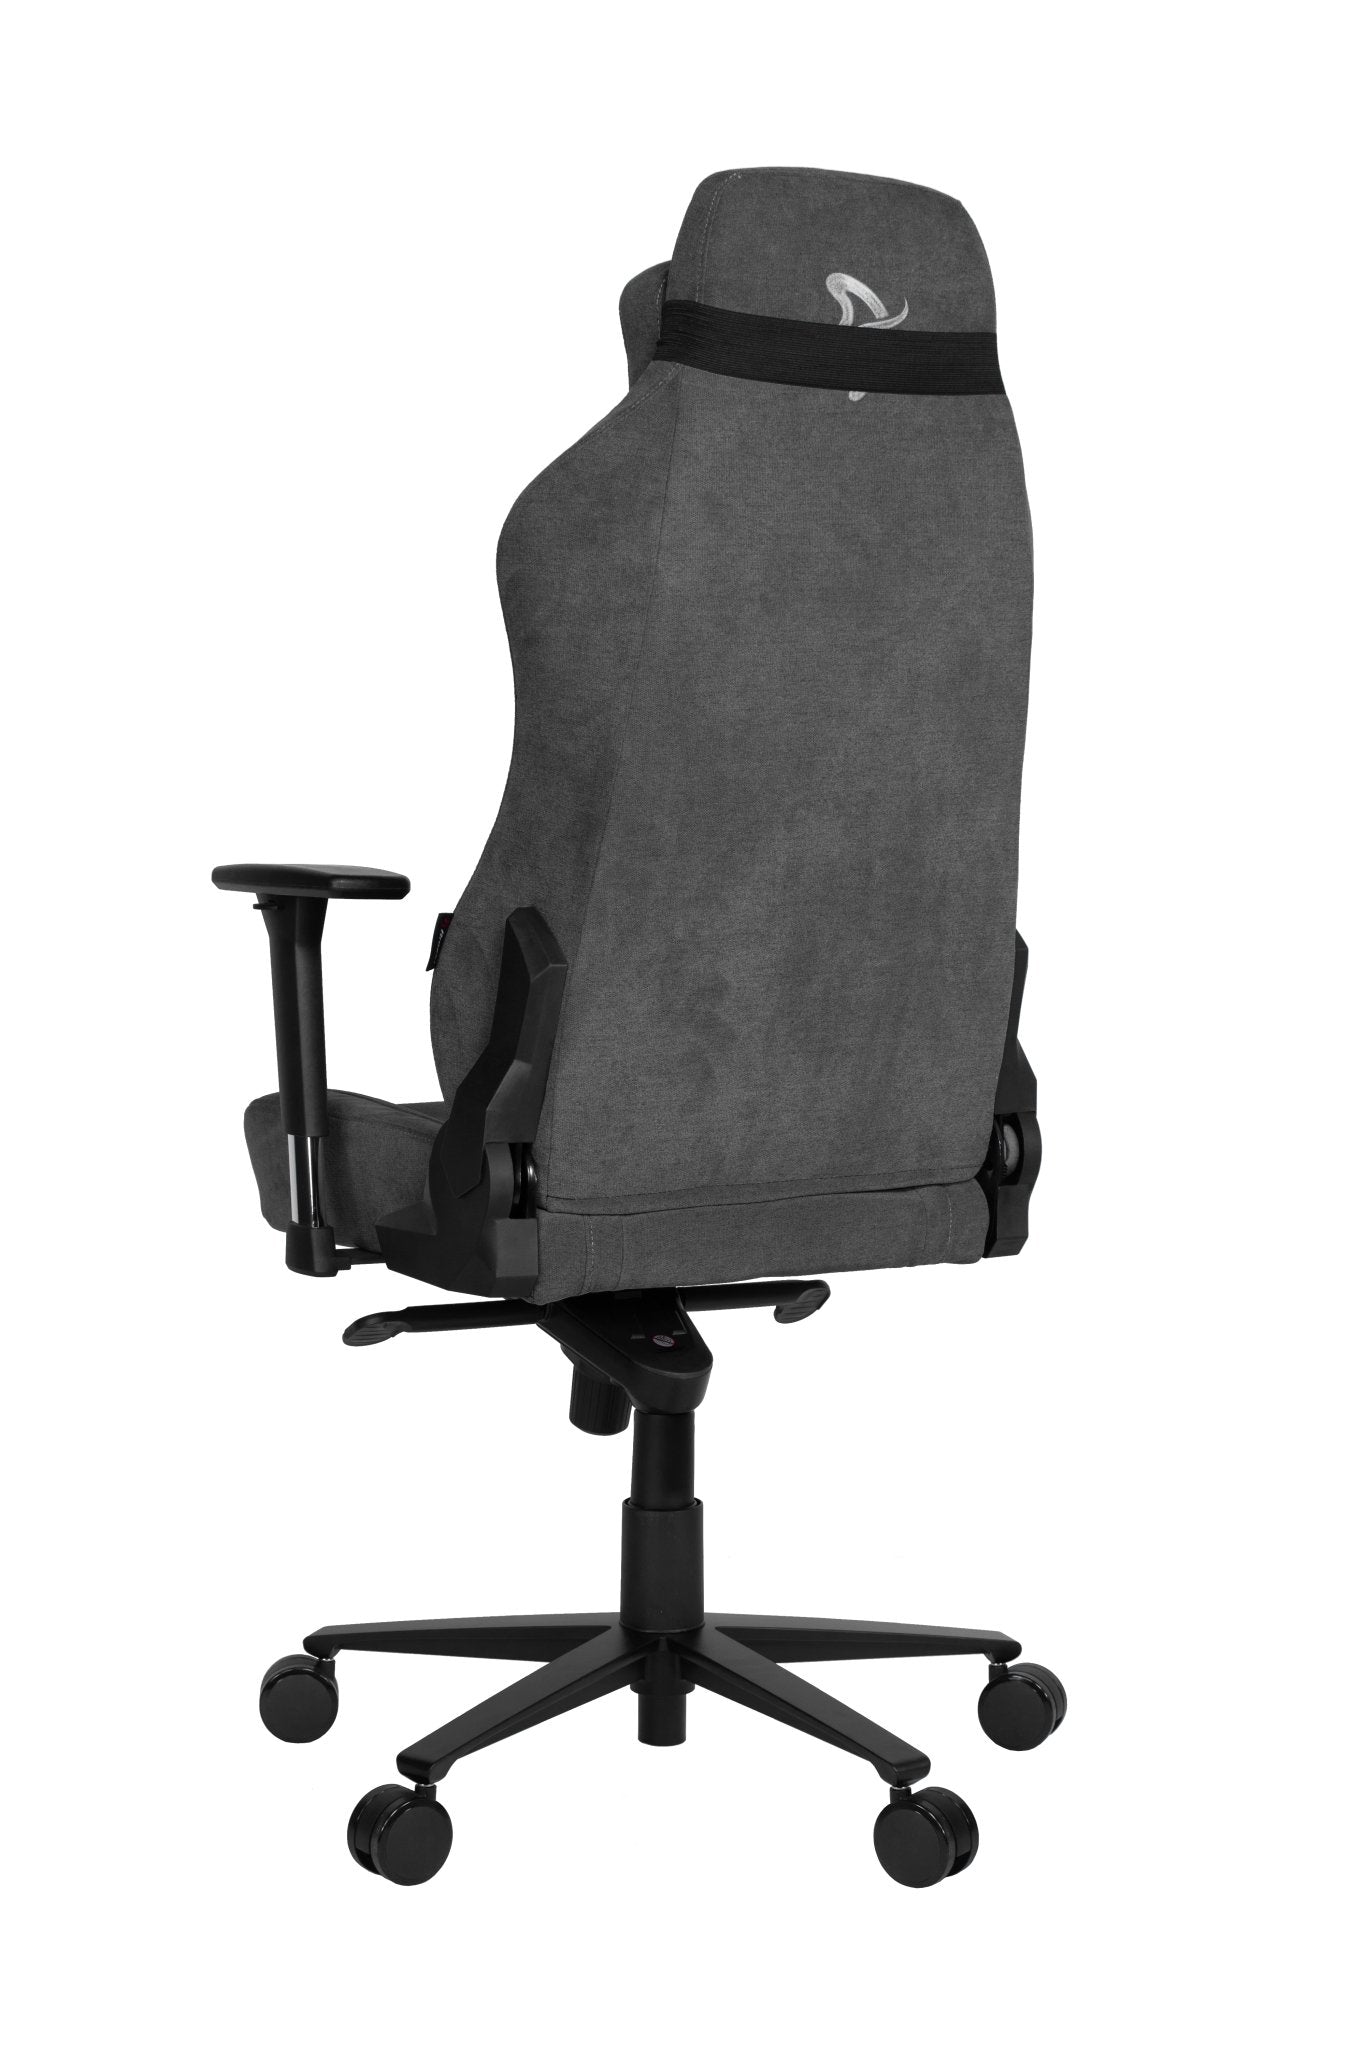 Arozzi Vernazza Soft Fabric - Dark Grey - Level UpArozziGaming Chair0769498680001